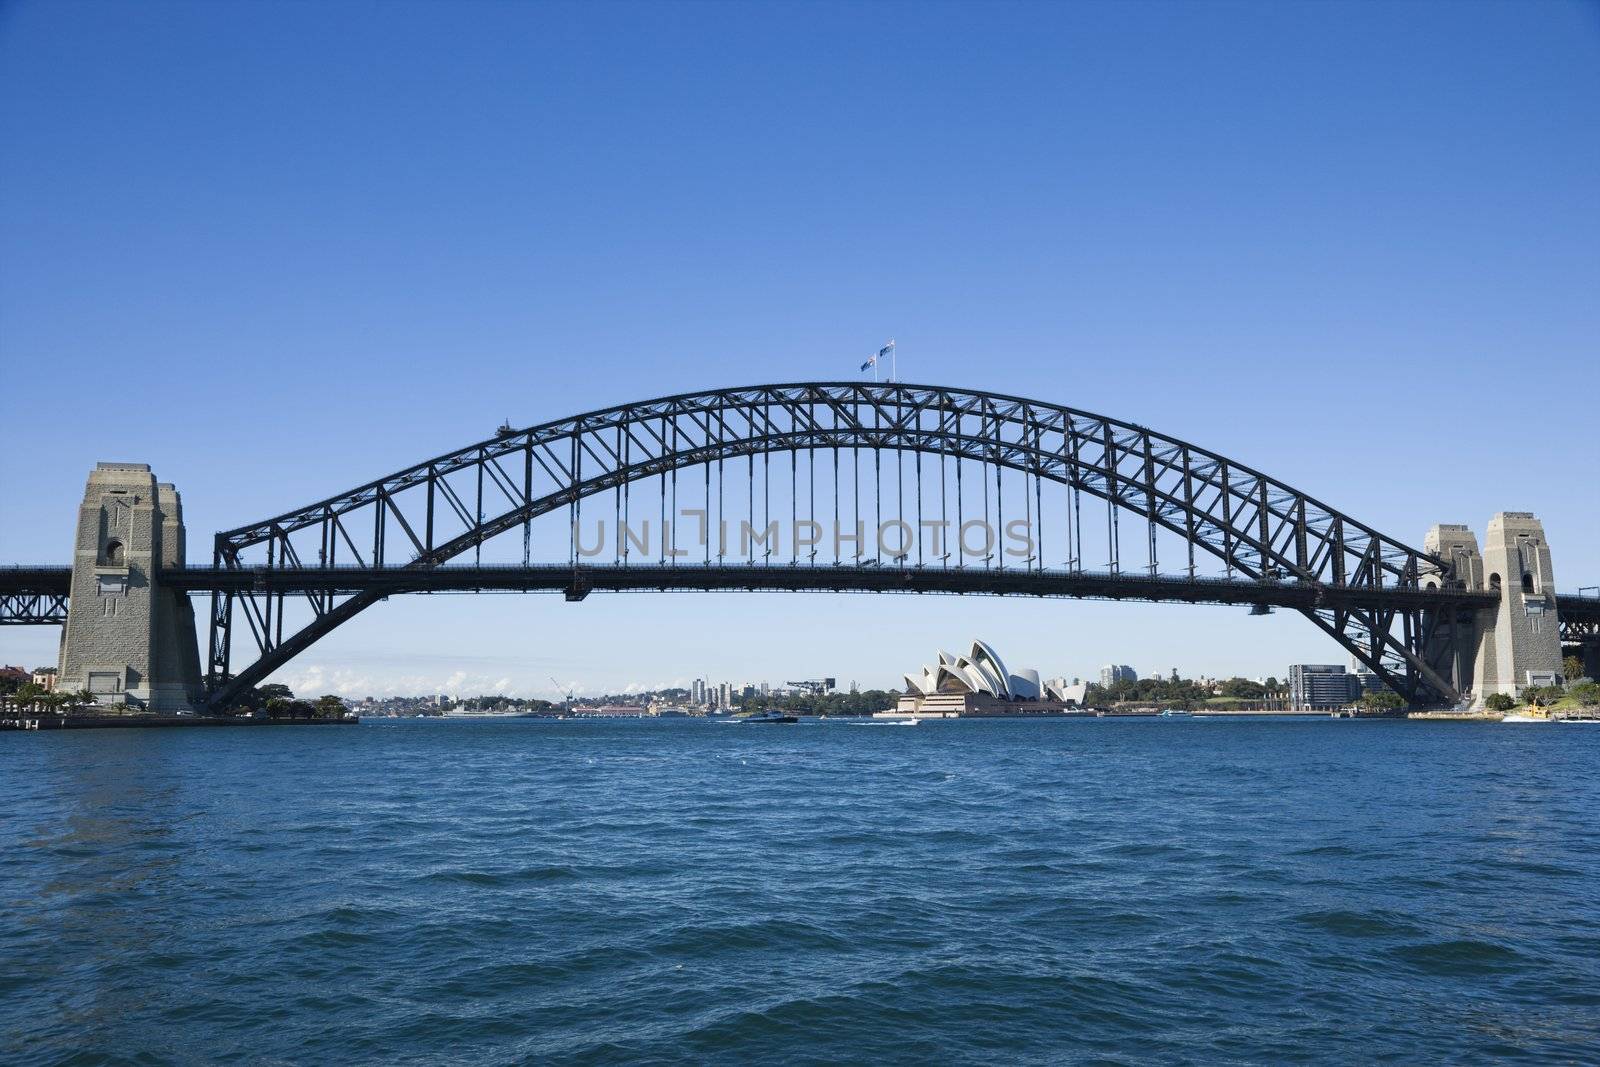 Sydney Harbour Bridge with view of Sydney Opera House in Australia.